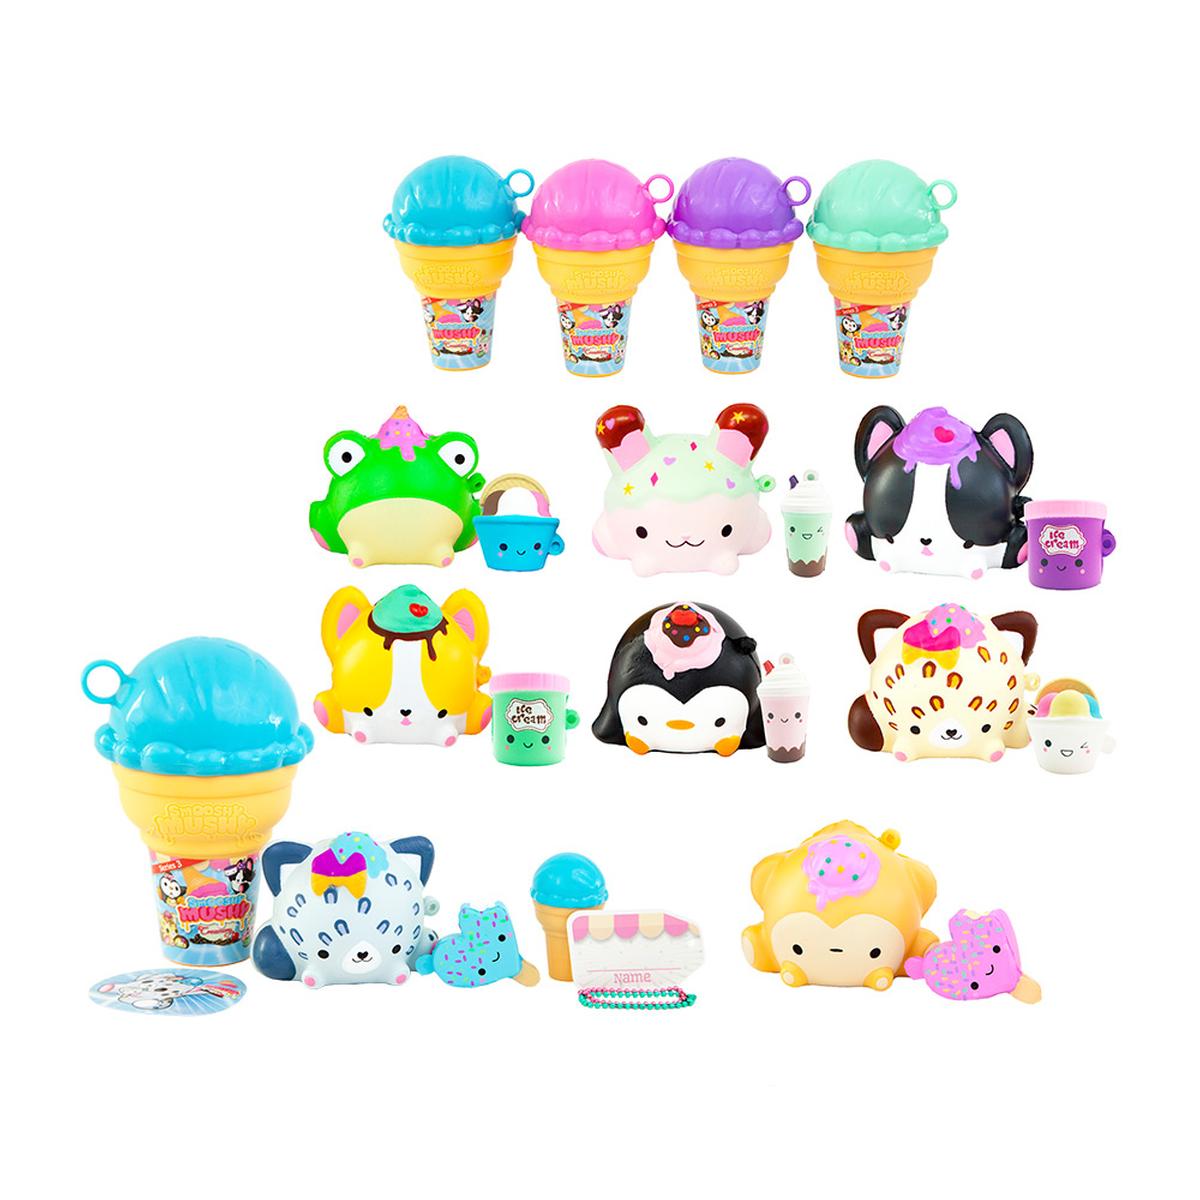 Smooshy Mushy - Pack 1 Smooshy Creamery (varios modelos) | Squishies |  Toys"R"Us España